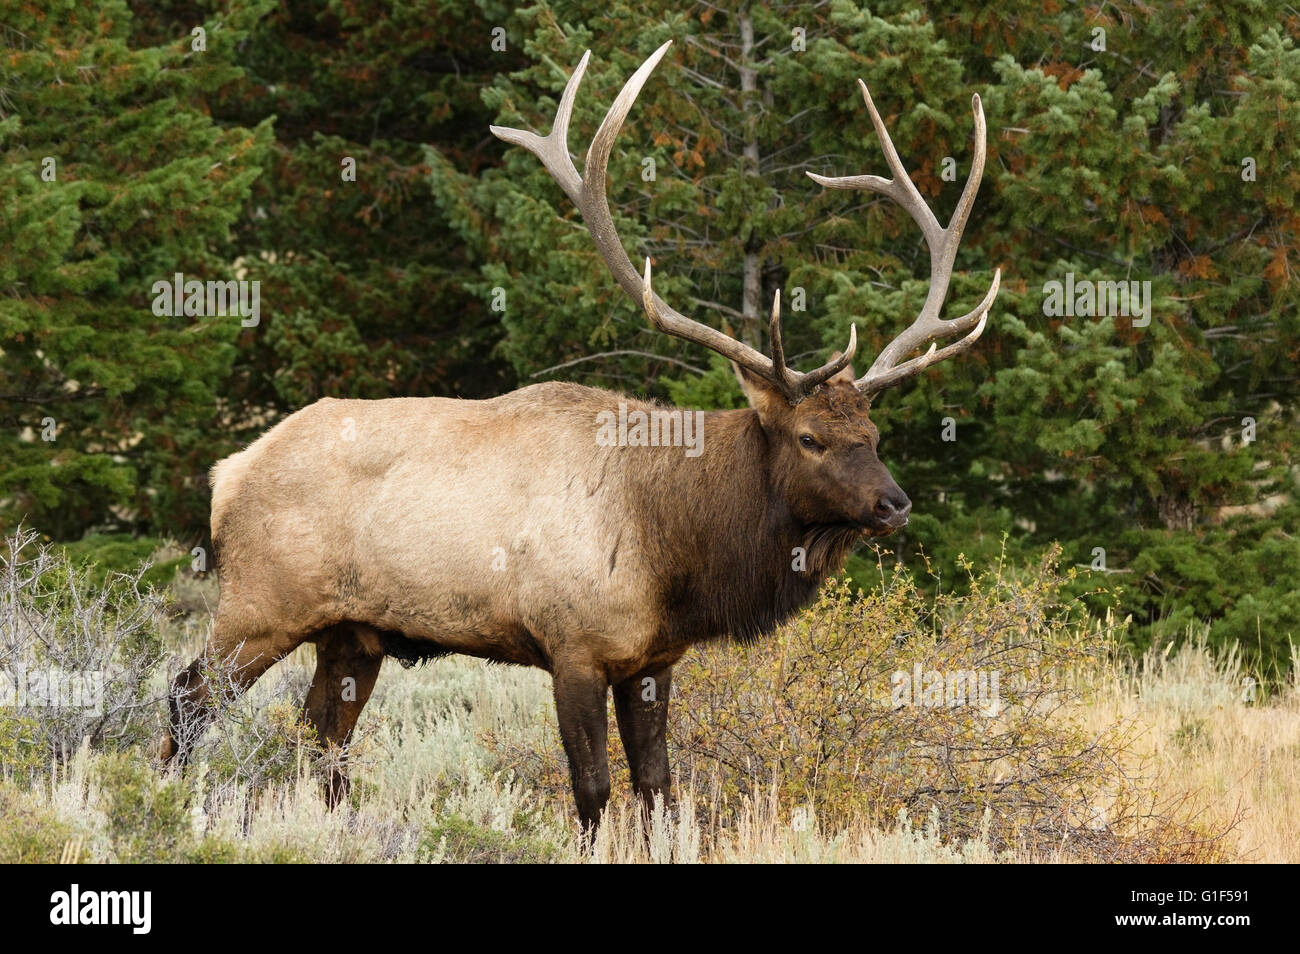 bull elk or cervus elaphus standing in a meadow in front of pine trees Stock Photo